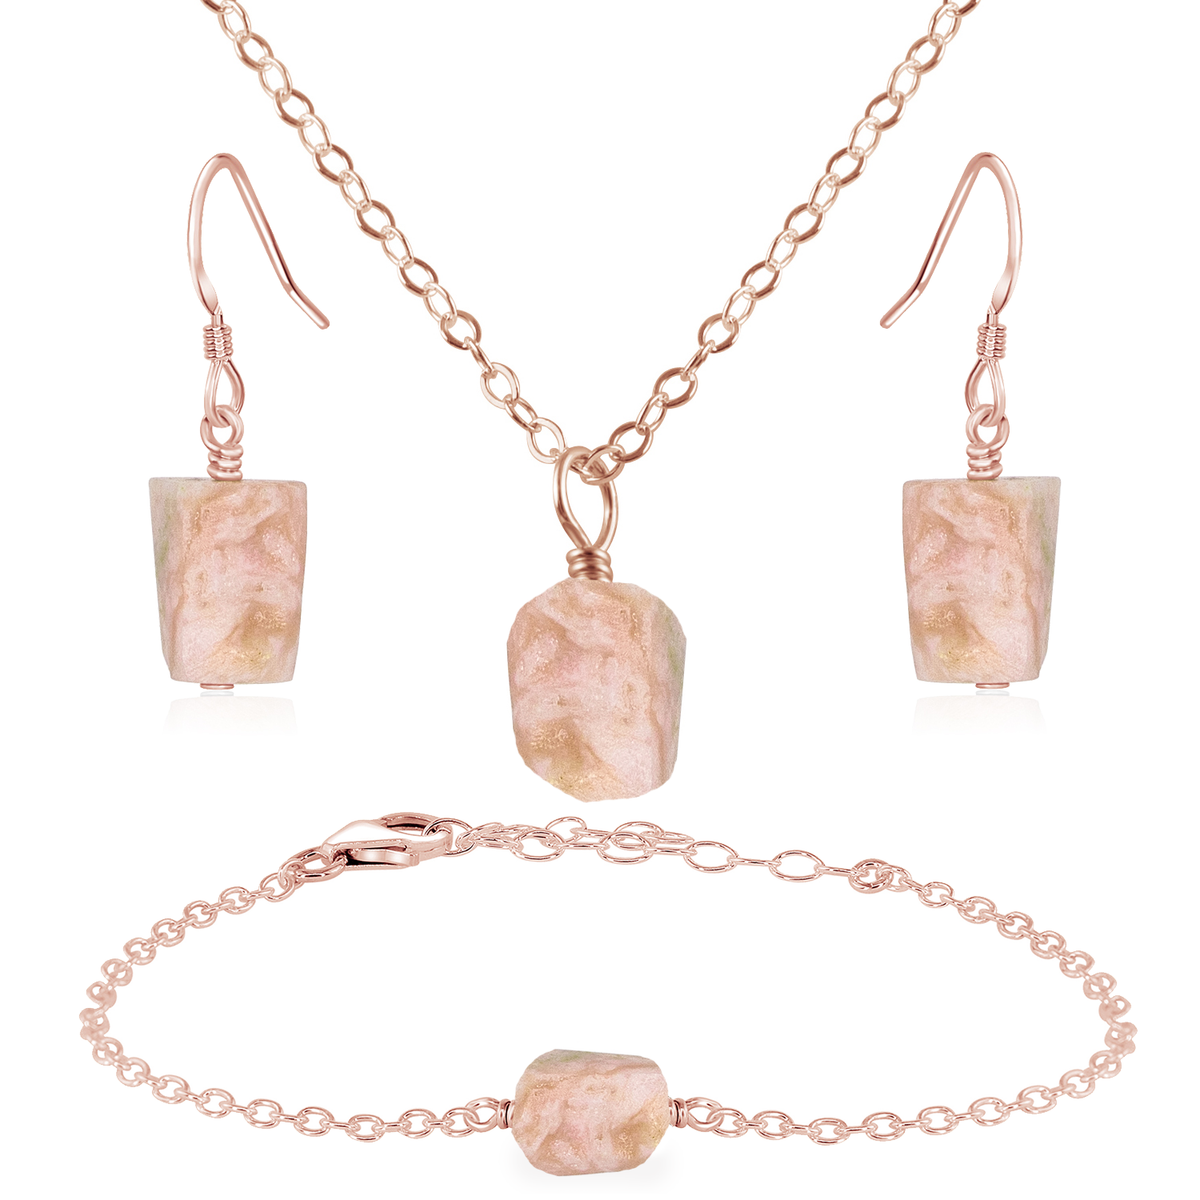 Raw Pink Peruvian Opal Crystal Jewellery Set - Raw Pink Peruvian Opal Crystal Jewellery Set - 14k Rose Gold Fill / Cable / Necklace & Earrings & Bracelet - Luna Tide Handmade Crystal Jewellery